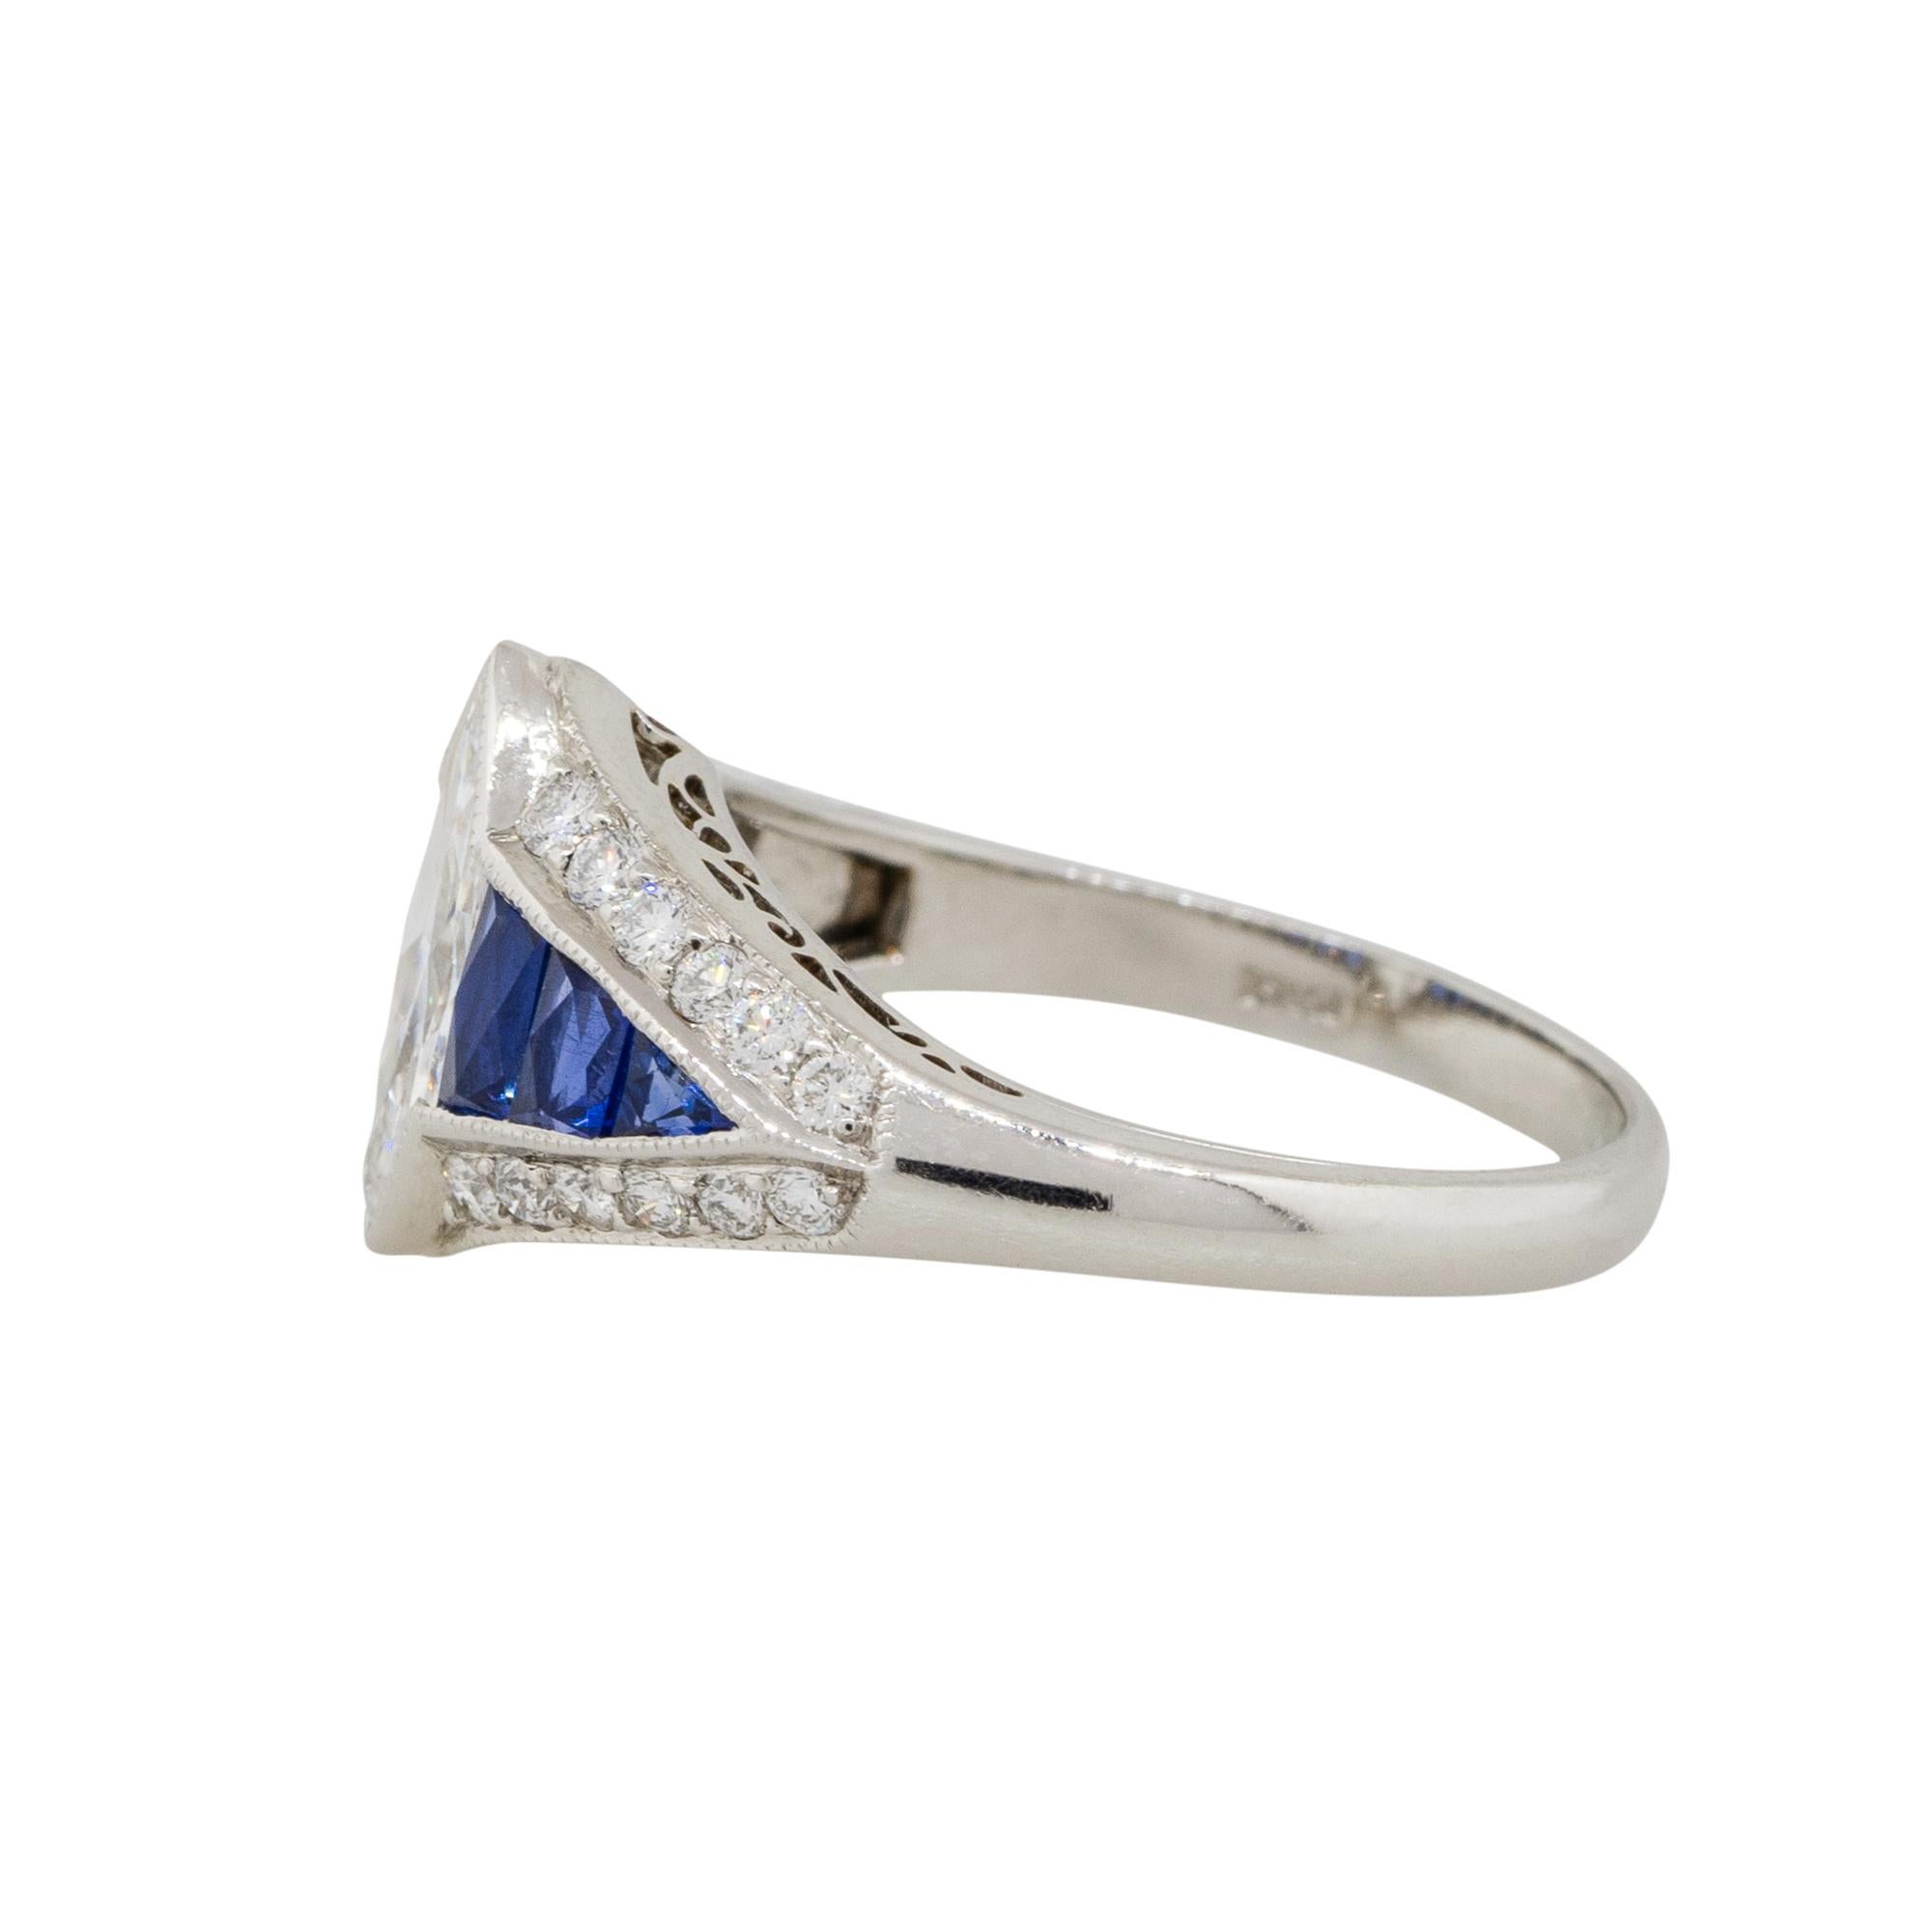 Marquise Cut Platinum 0.80 Carat Marquise Diamond Center Ring with Sapphires